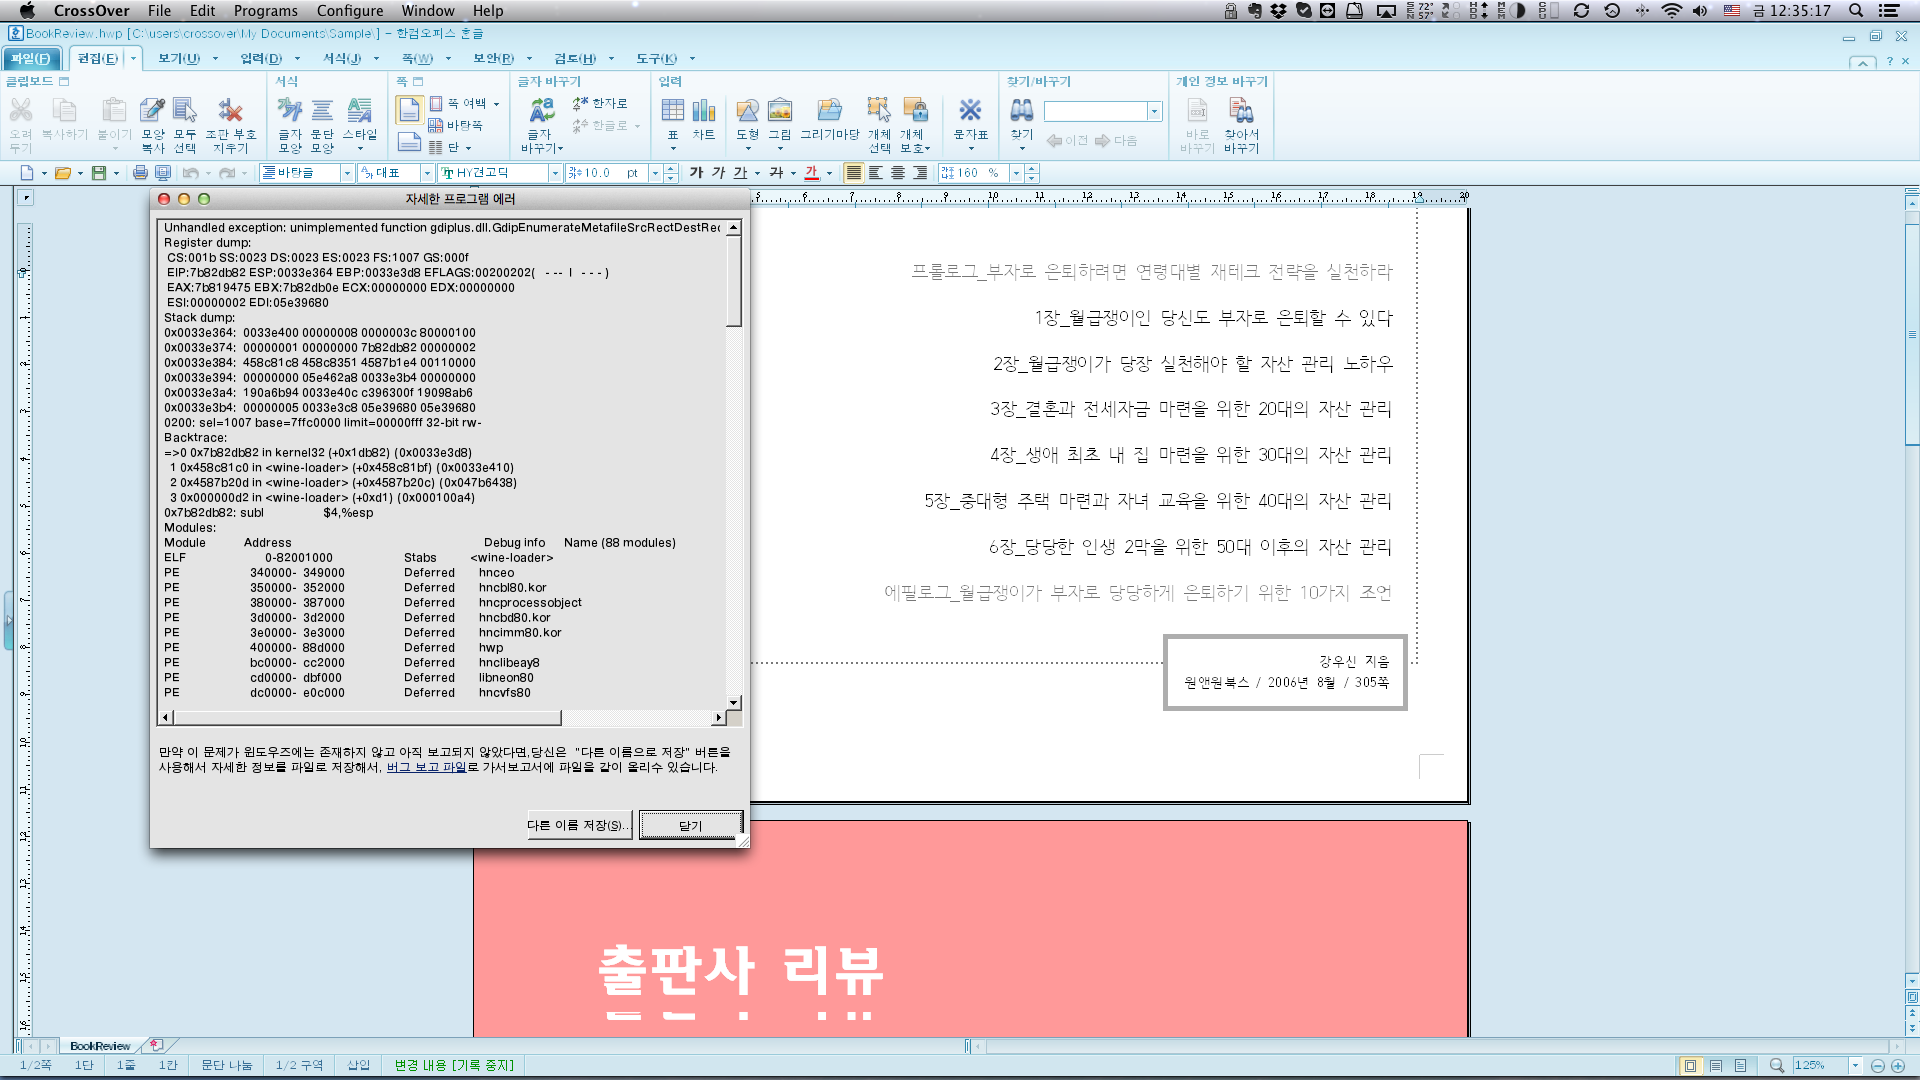 hwp hangul word processor download